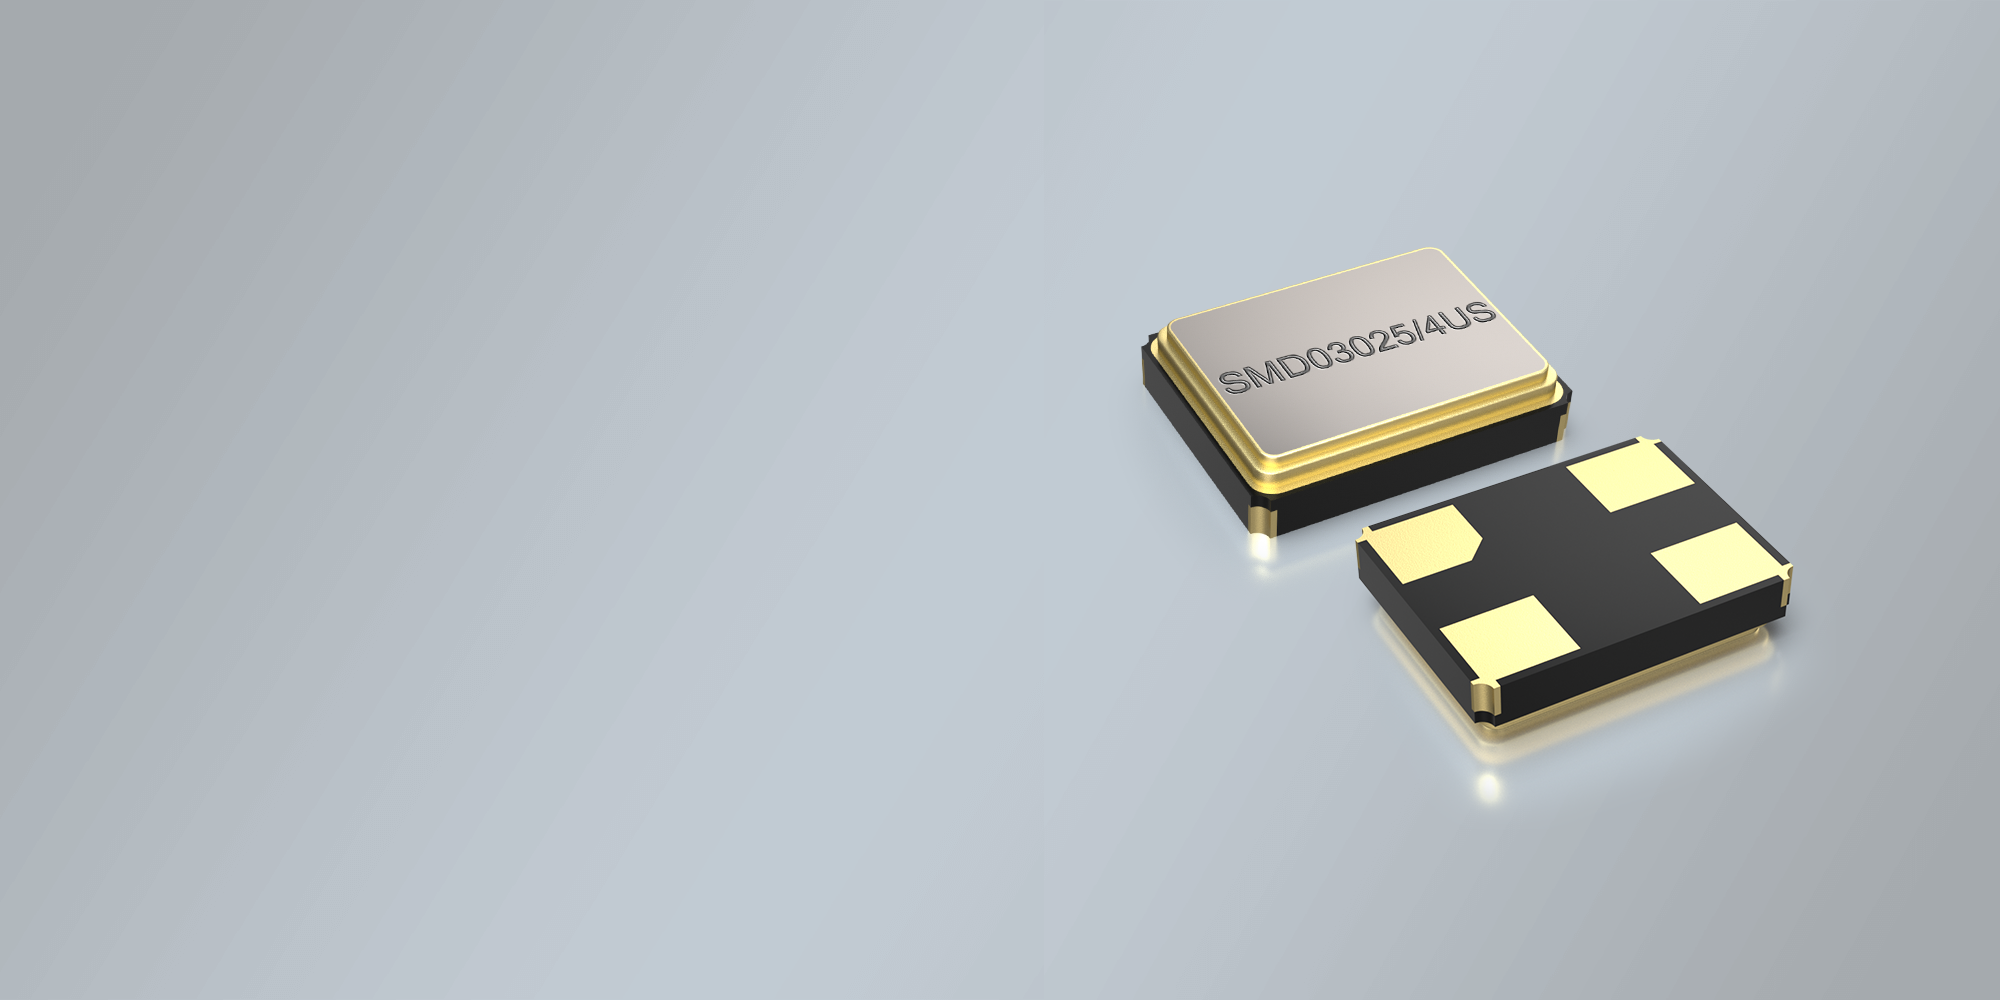 SMD QUARTZ 3.2 x 2.5 mm 12.0 - 40.0 MHz ULTRASONIC